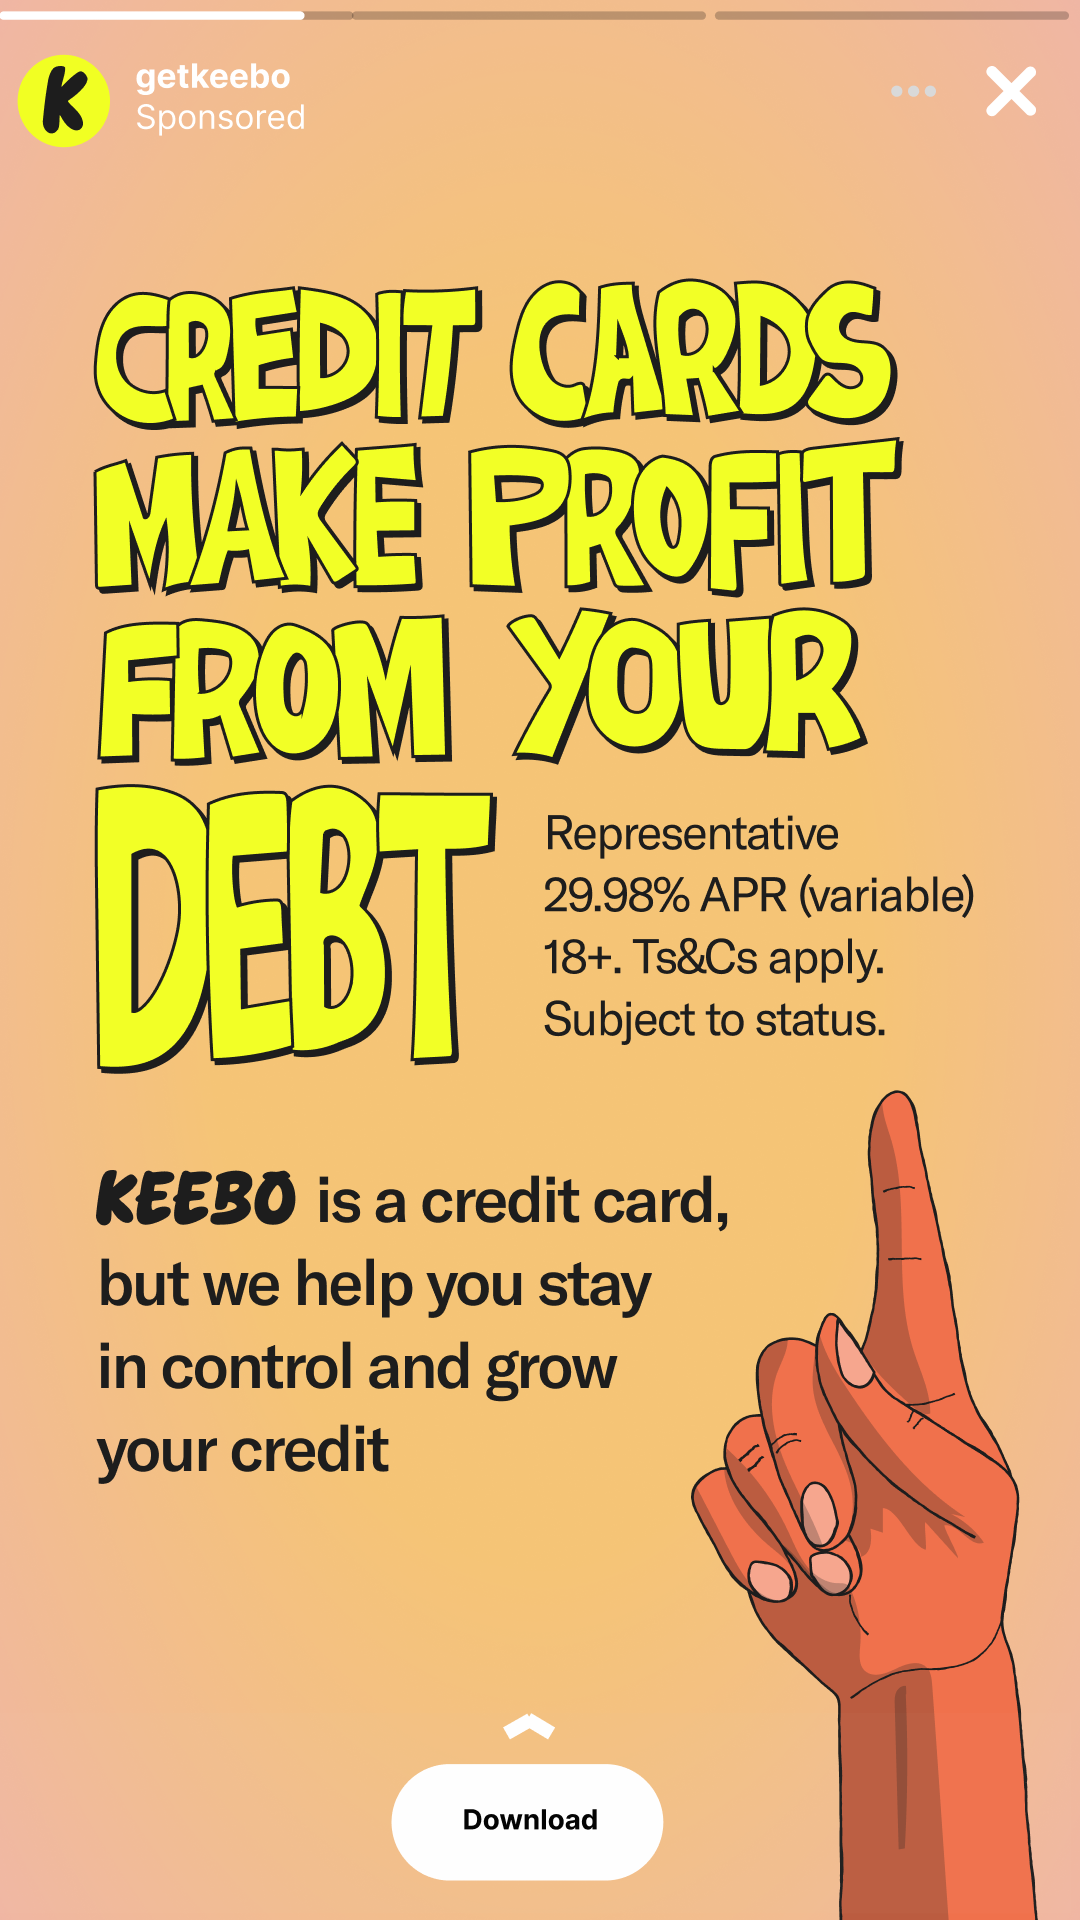 Credit cards make profit - Stories.png